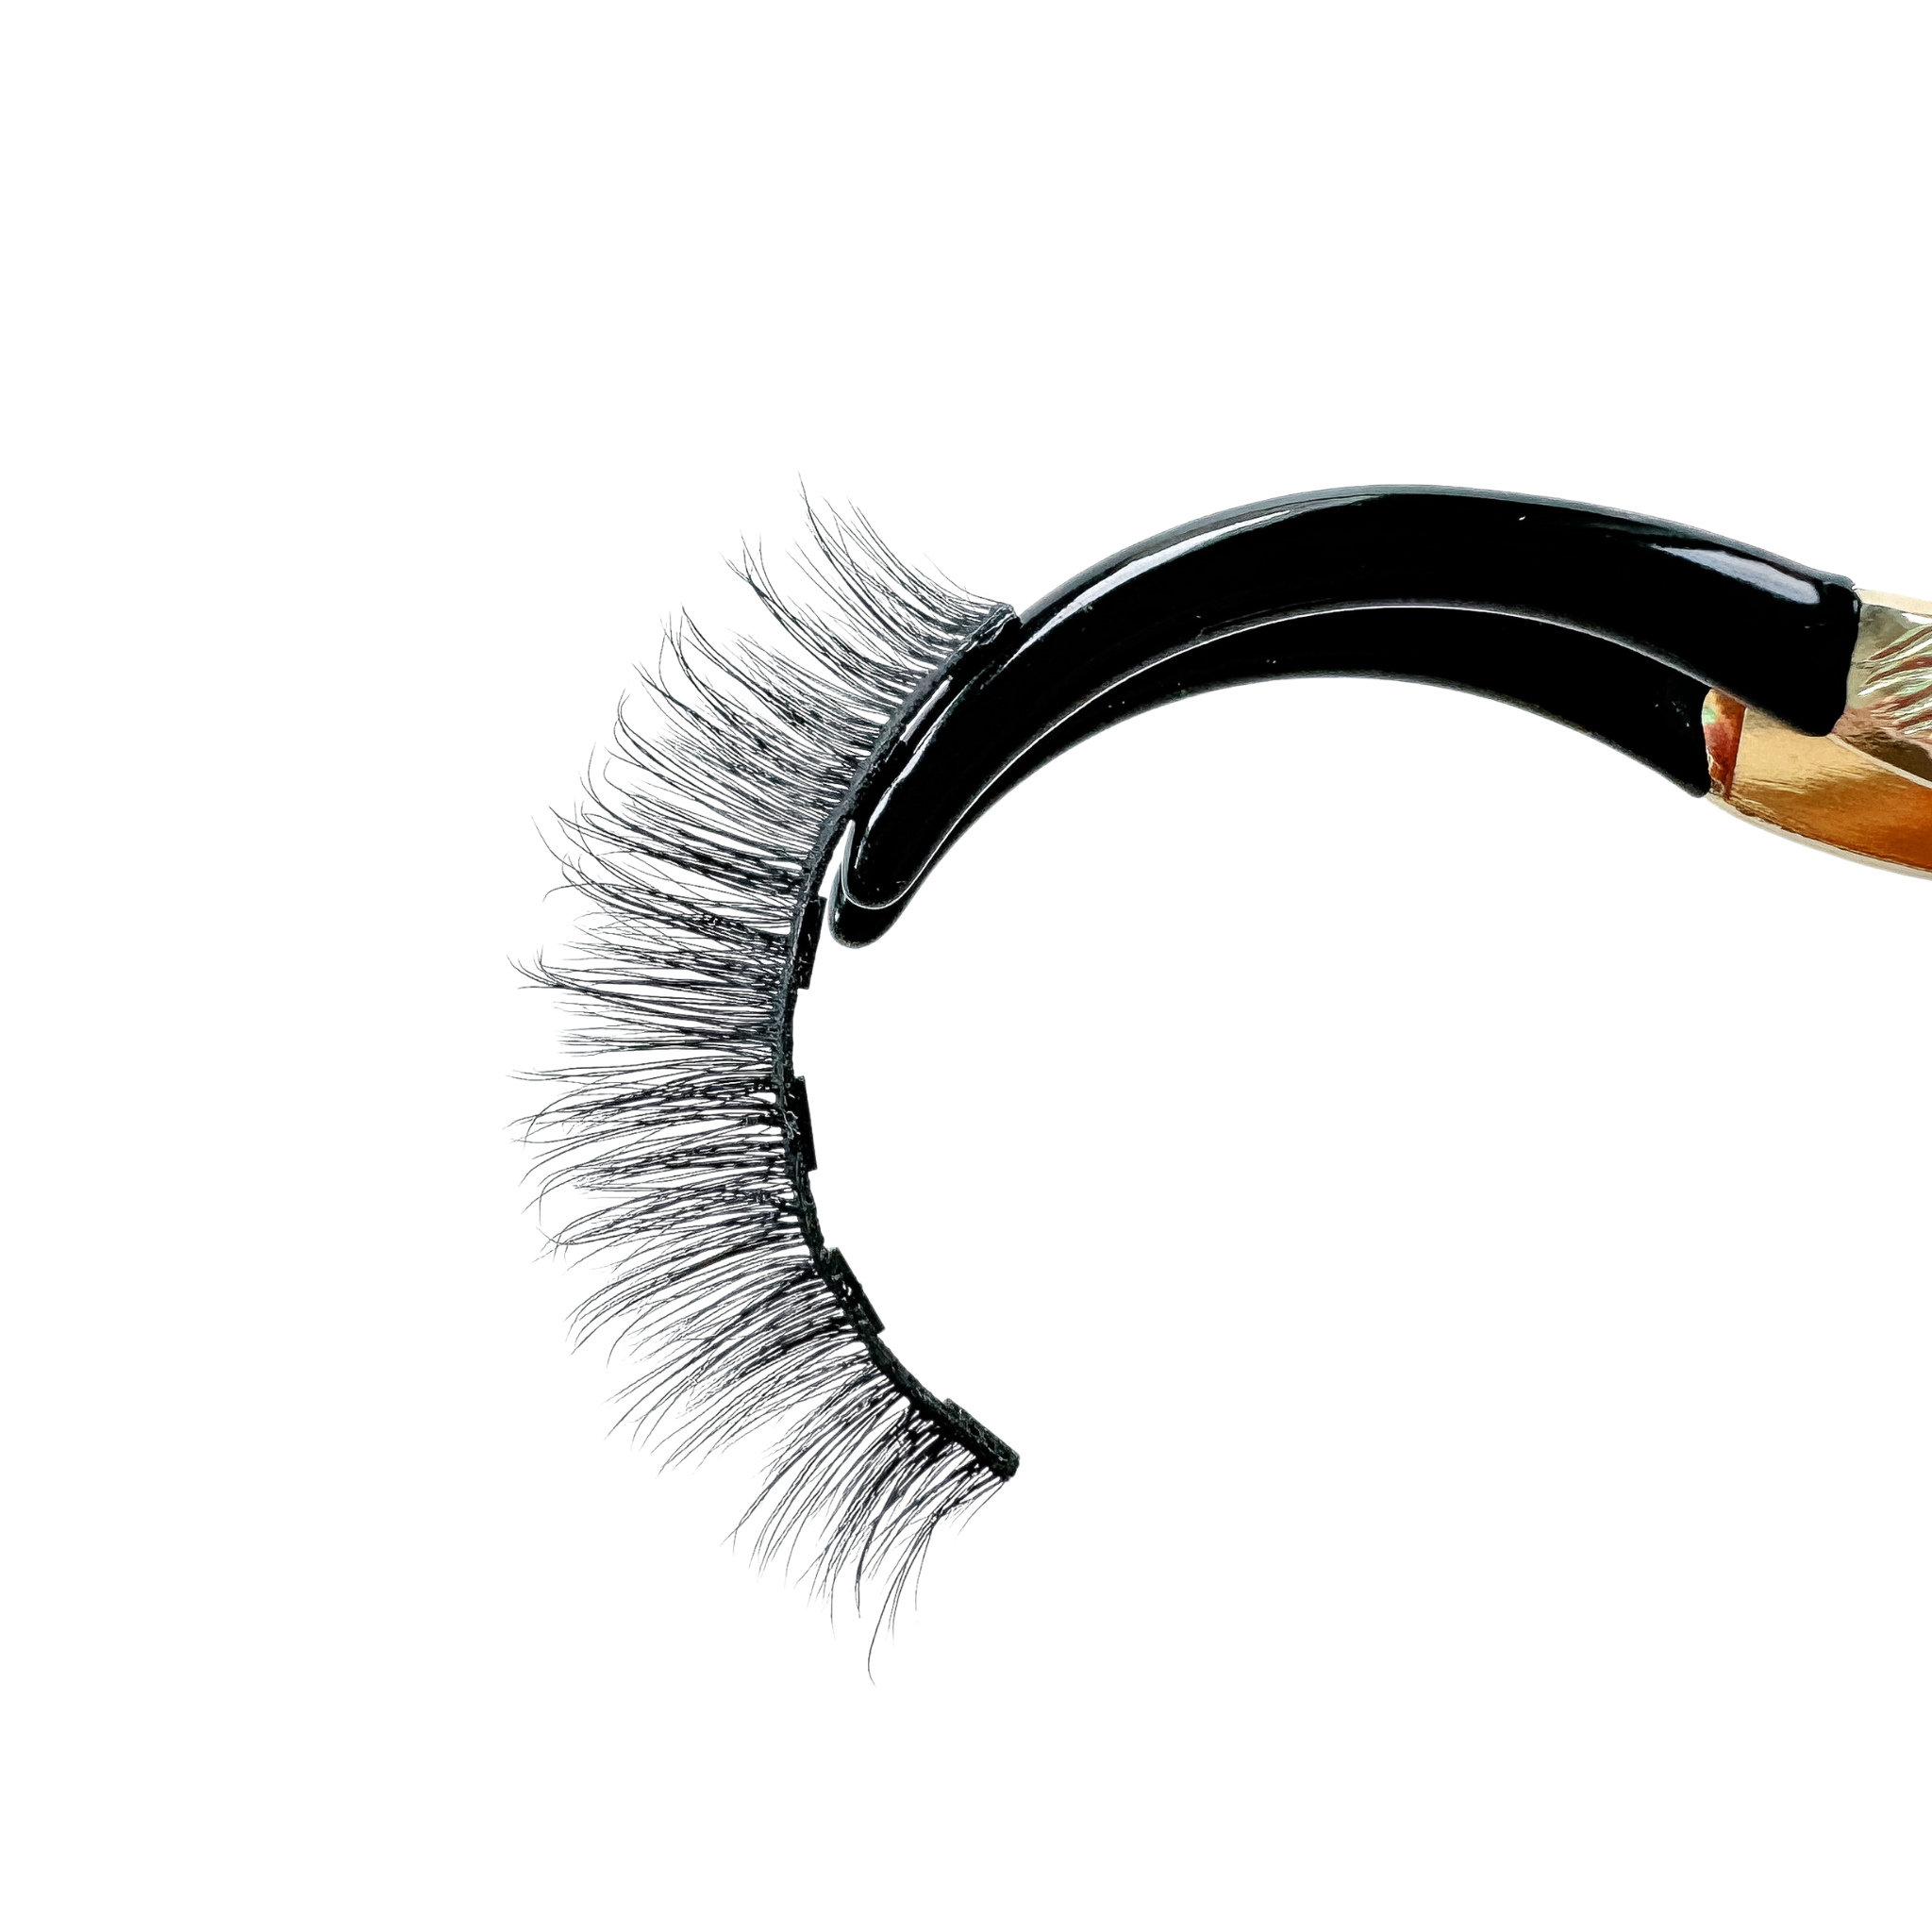 Magnetic Eyelashes Realistic Natural False Lash. Faux Real 3D Magnetic False Eyelashes - Premium Reusable Magnetic Eyelashes. 100% Cruelty-Free & Vegan Fibers. Sustainably Packaged. Compostable Trays.